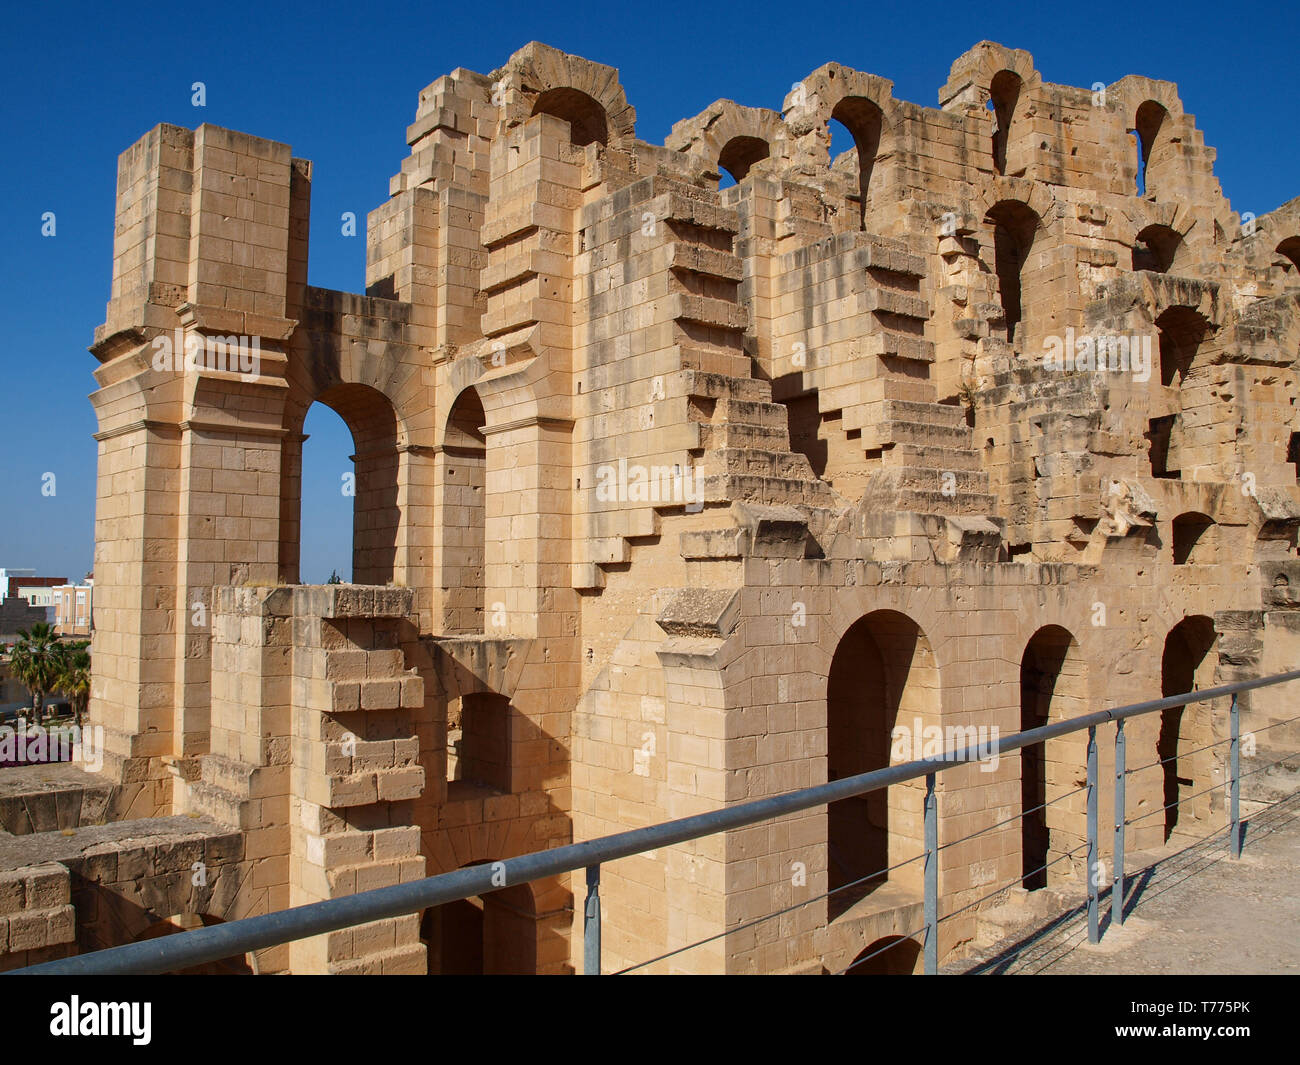 Fragment of the ancient Roman amphitheater in El Jem in Tunisia, horizontal photo Stock Photo